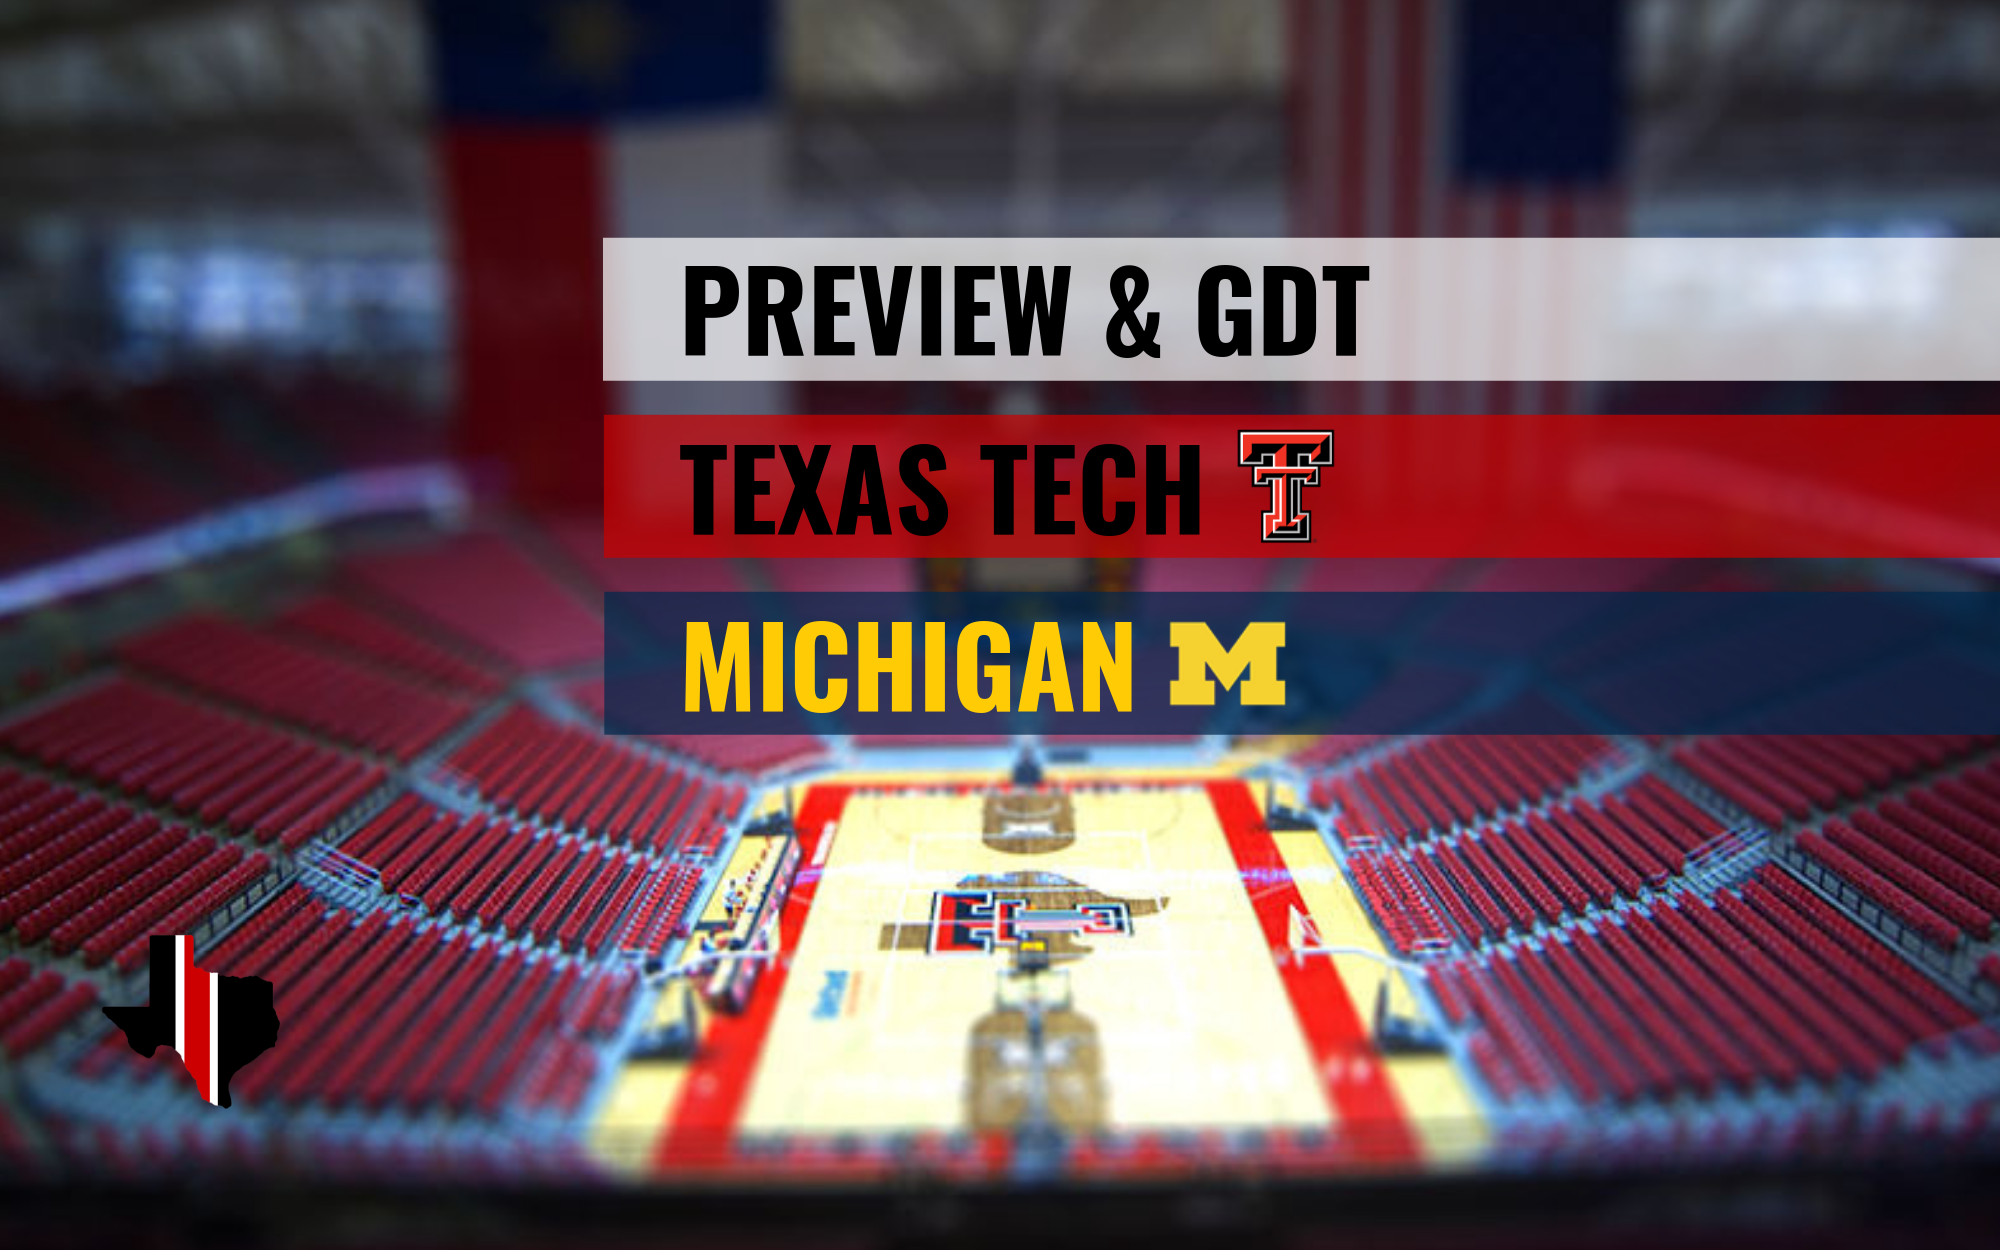 Preview & GDT: Texas Tech vs. Michigan